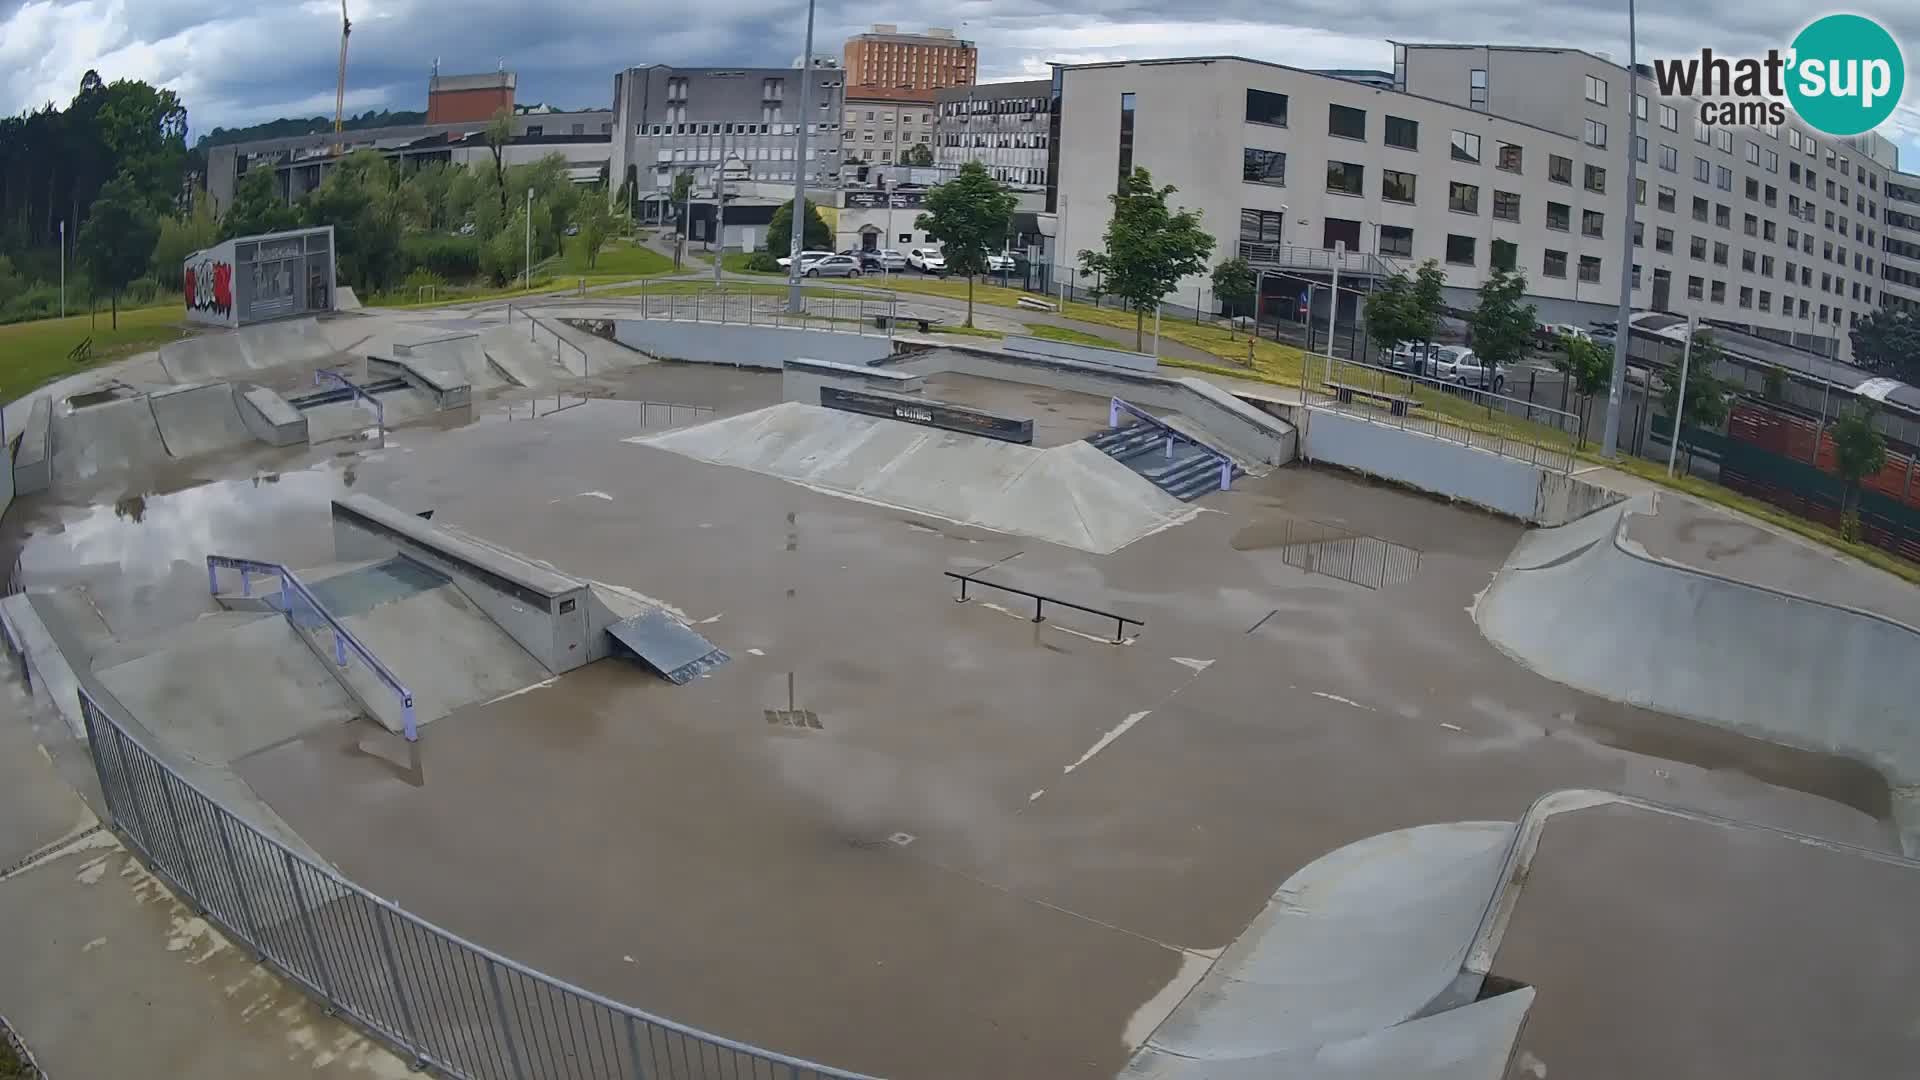 Camera en vivo Skate park Nova Gorica – Eslovenia